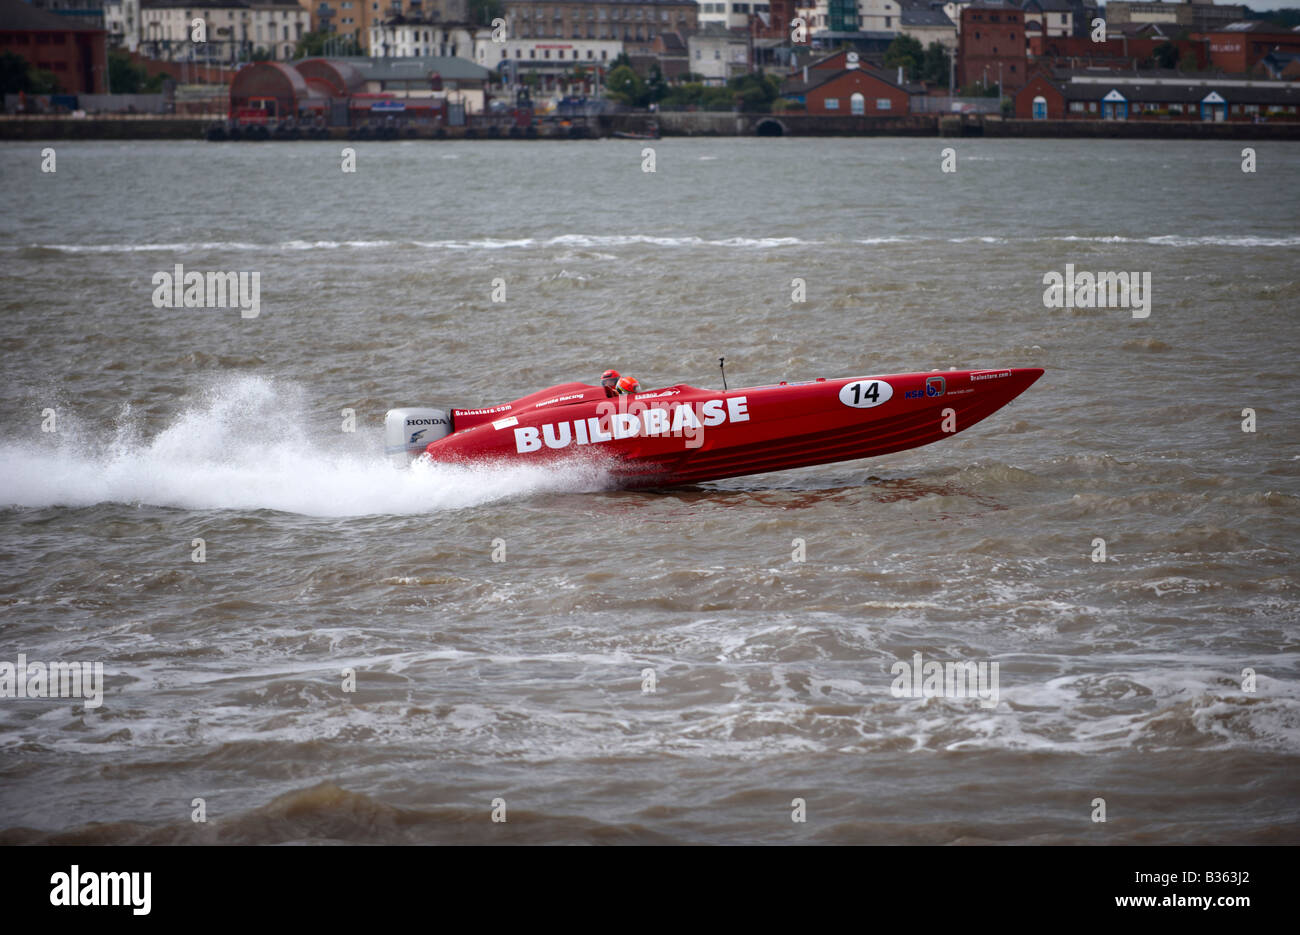 Honda Powerboat Racing Liverpool UK Stock Photo